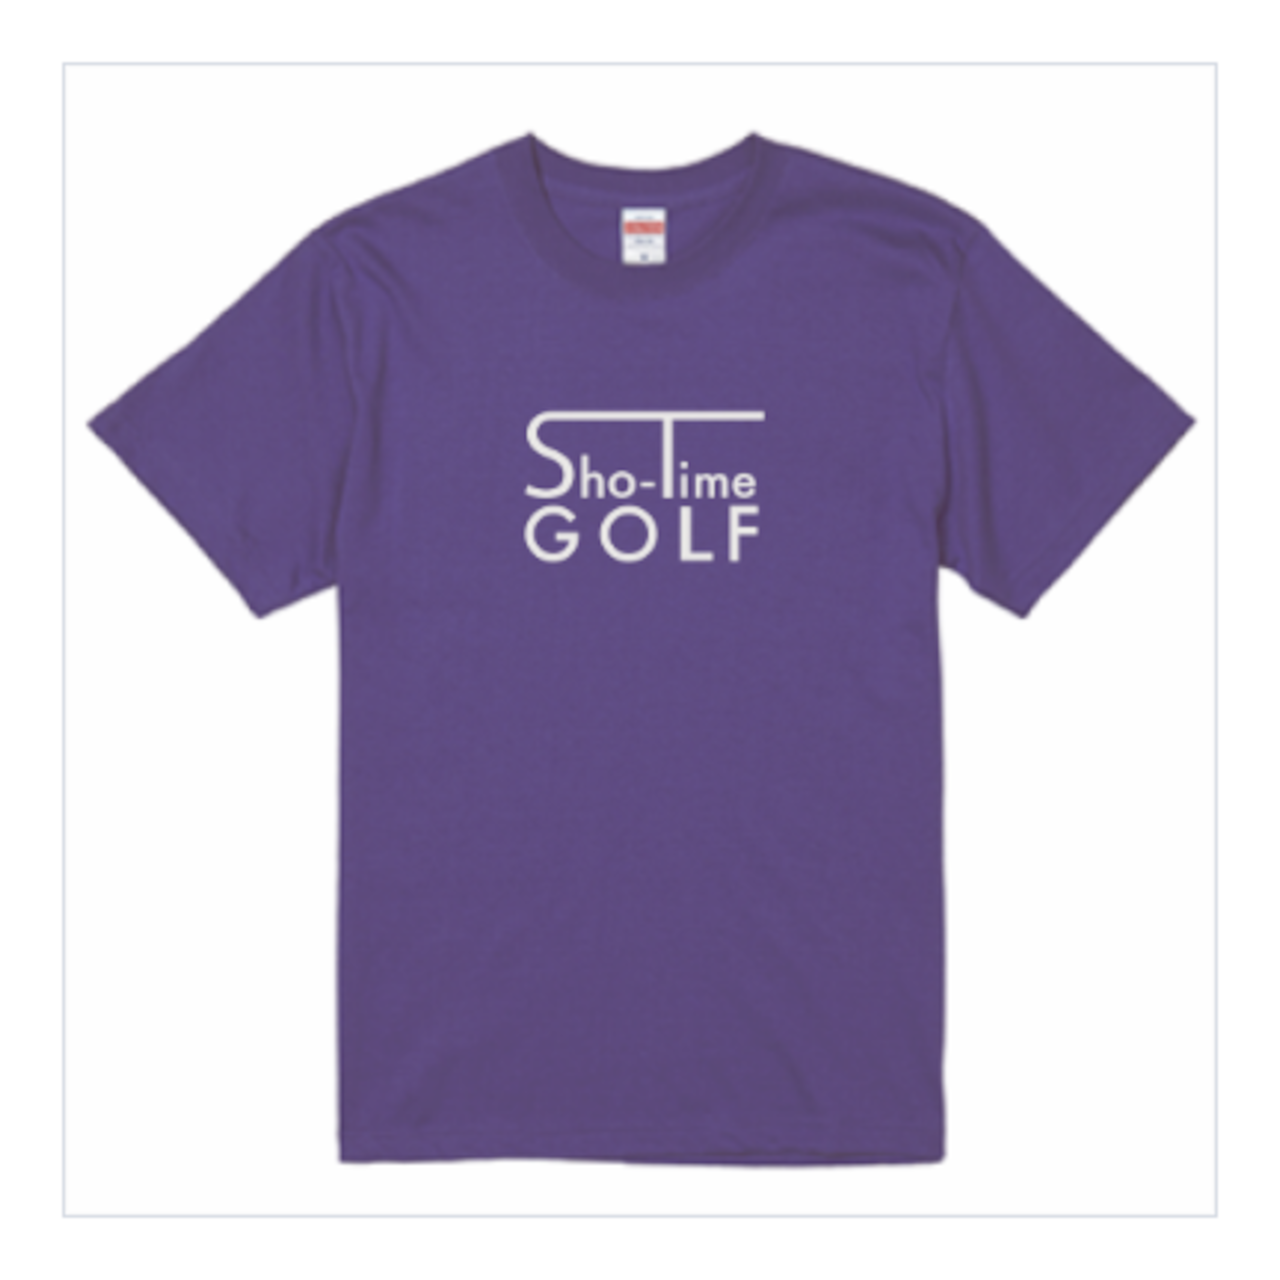 Sho-Time Golf